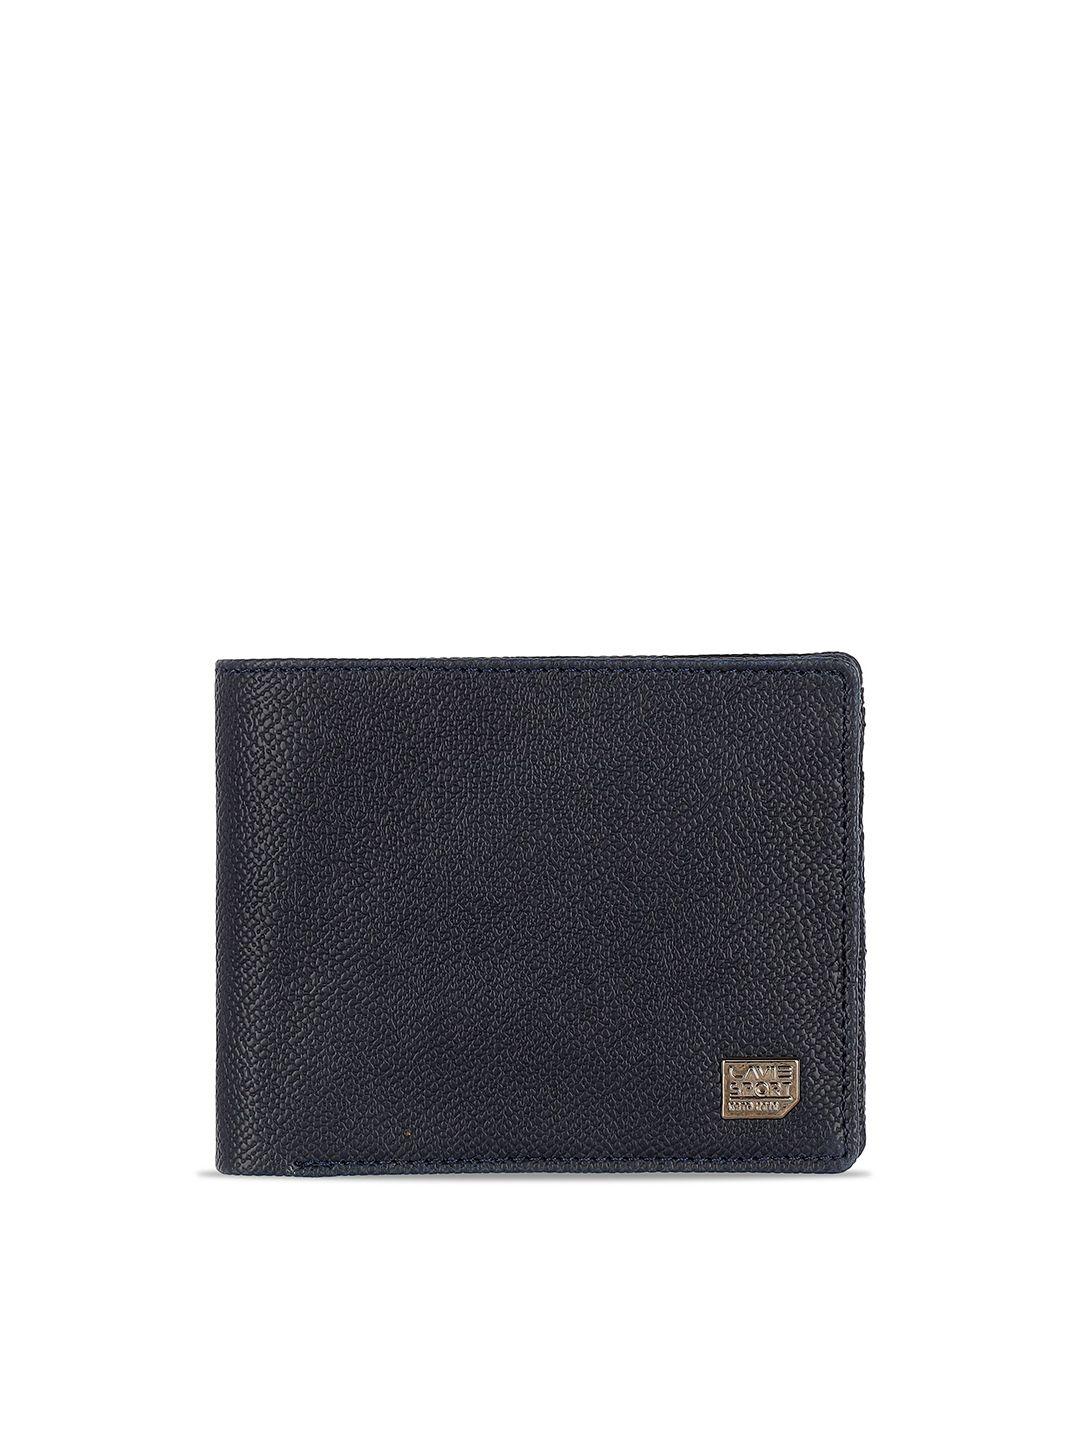 lavie sport men two fold wallet with sim card holder